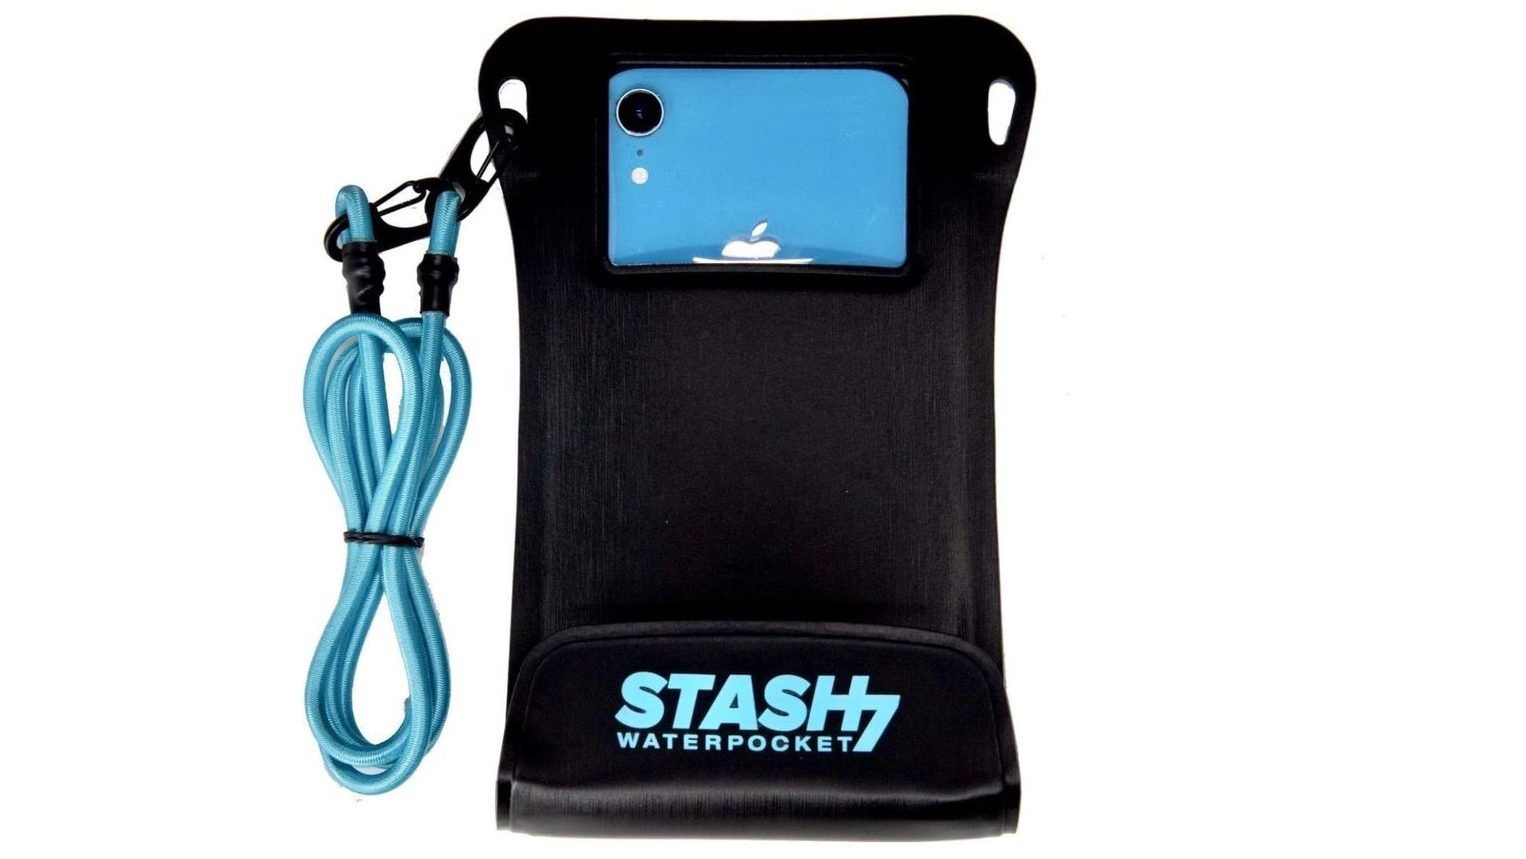 Toddmomy Underwater Phone Holder Phone Case Mobile Bag Phone Bag Outdoor  Bag Phone Holder Underwater Phone Cases Cell Phone Dry Bag Phone Pouch  Phone